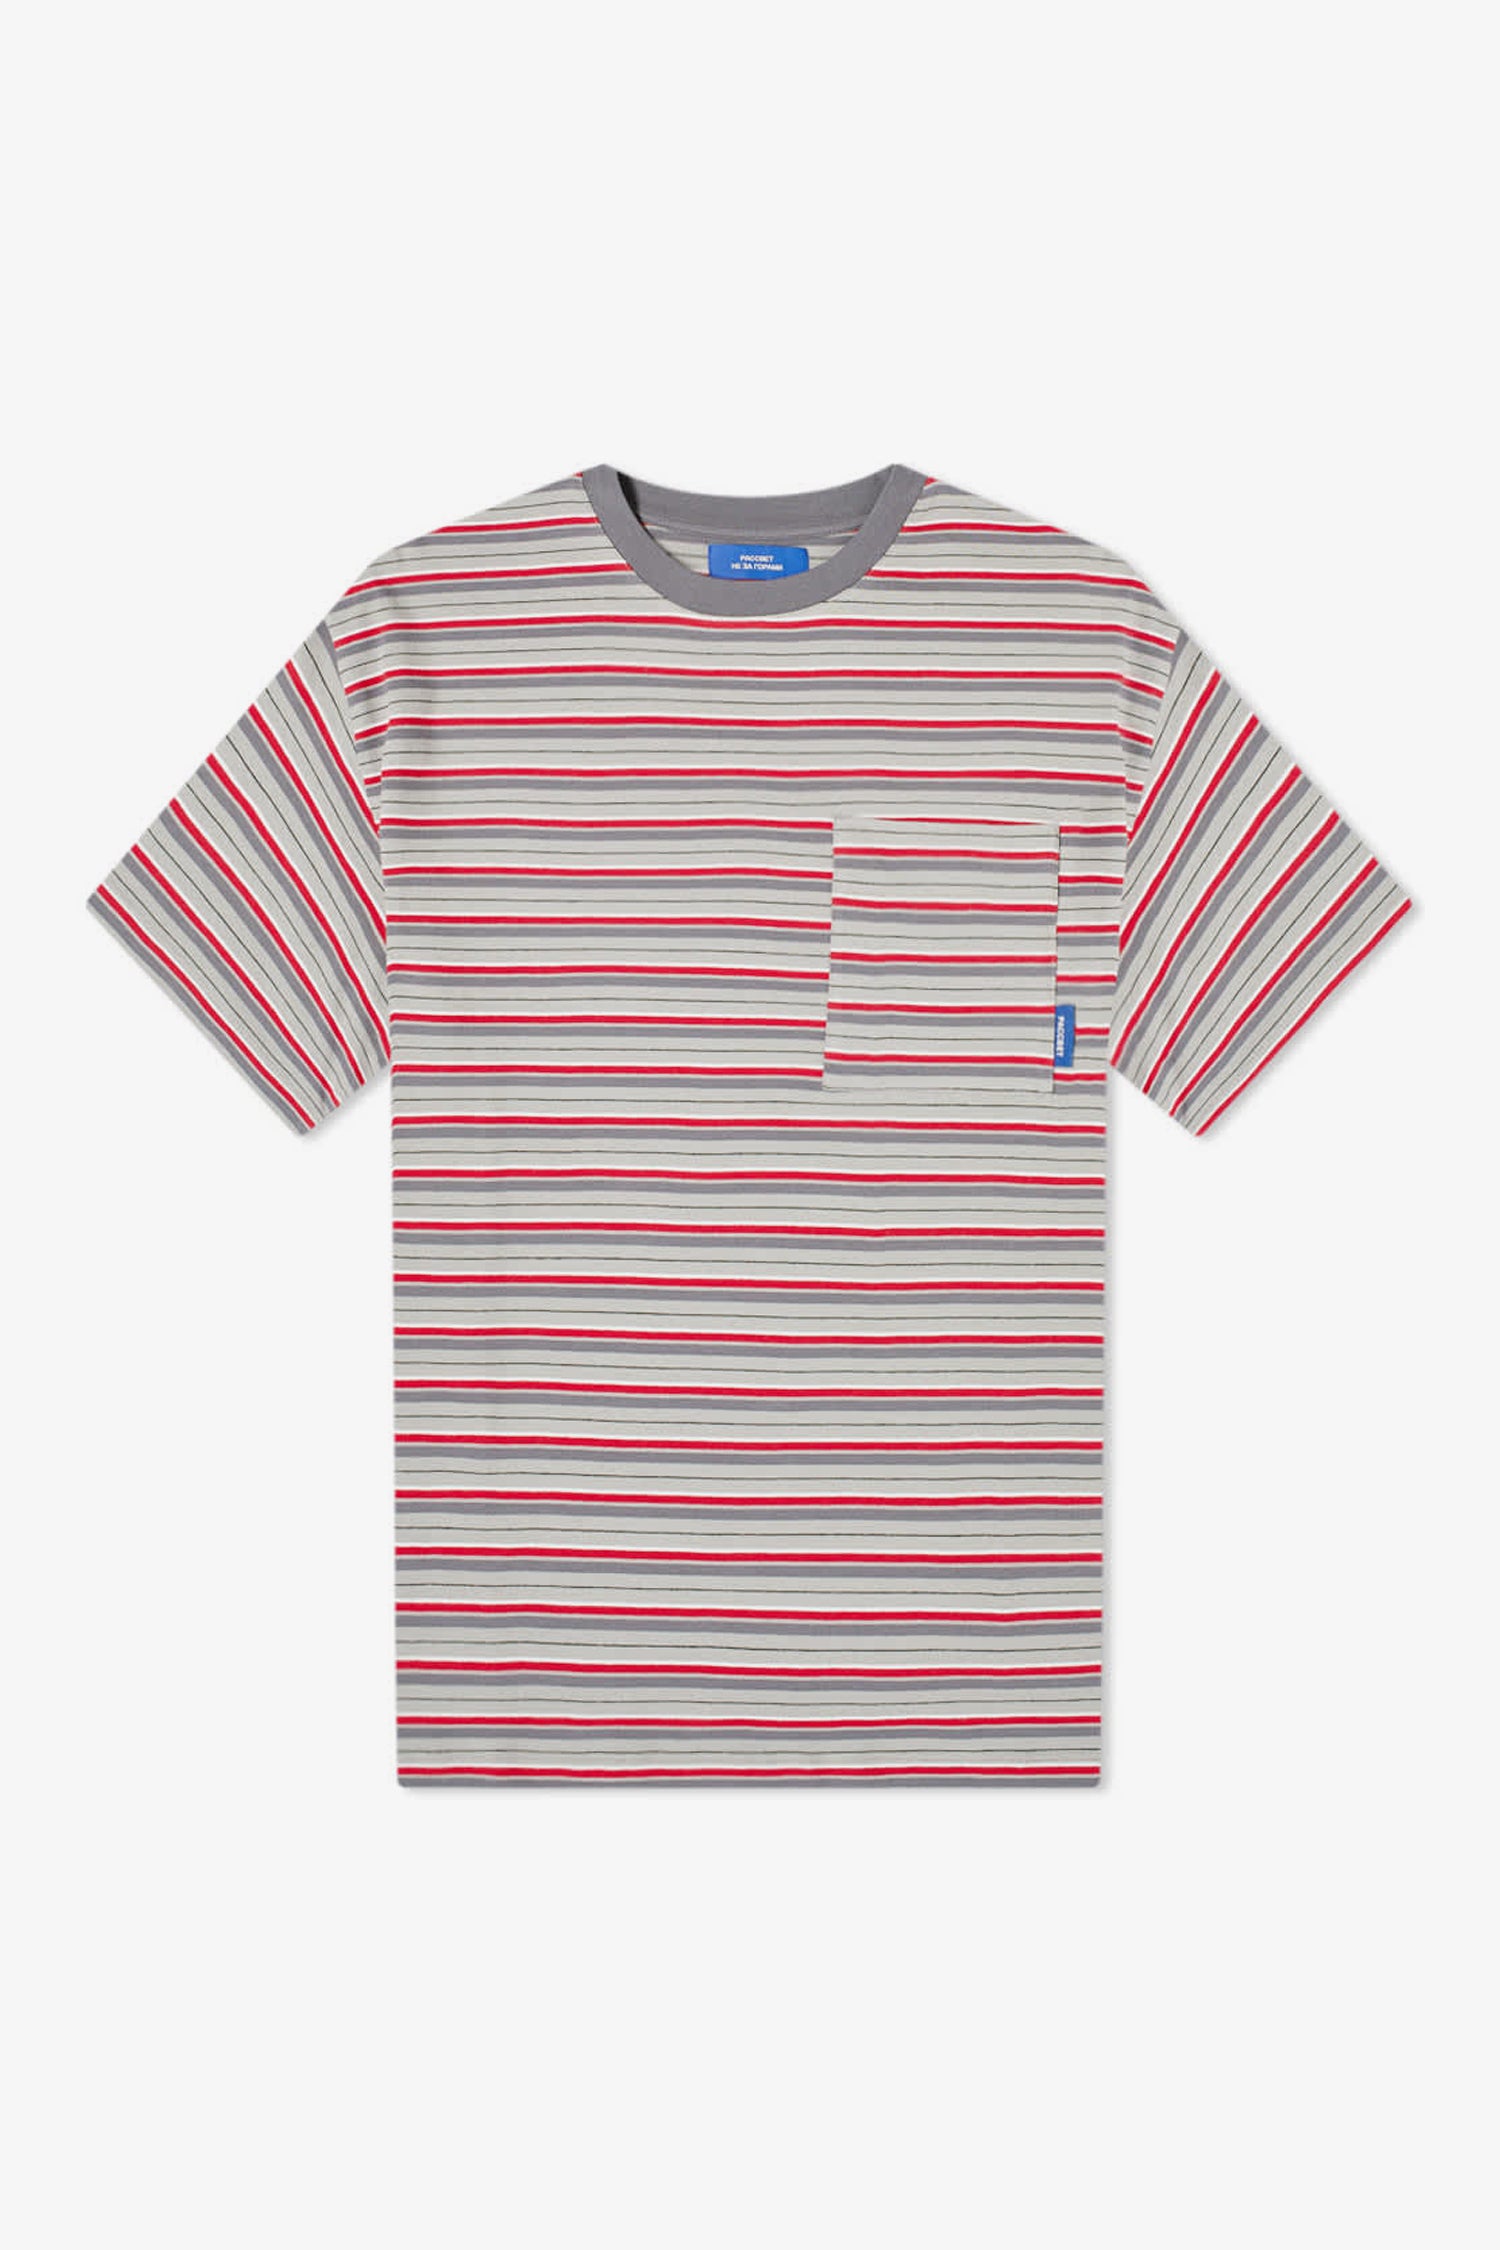 Selectshop FRAME - RASSVET Striped T-Shirt T-Shirt Dubai